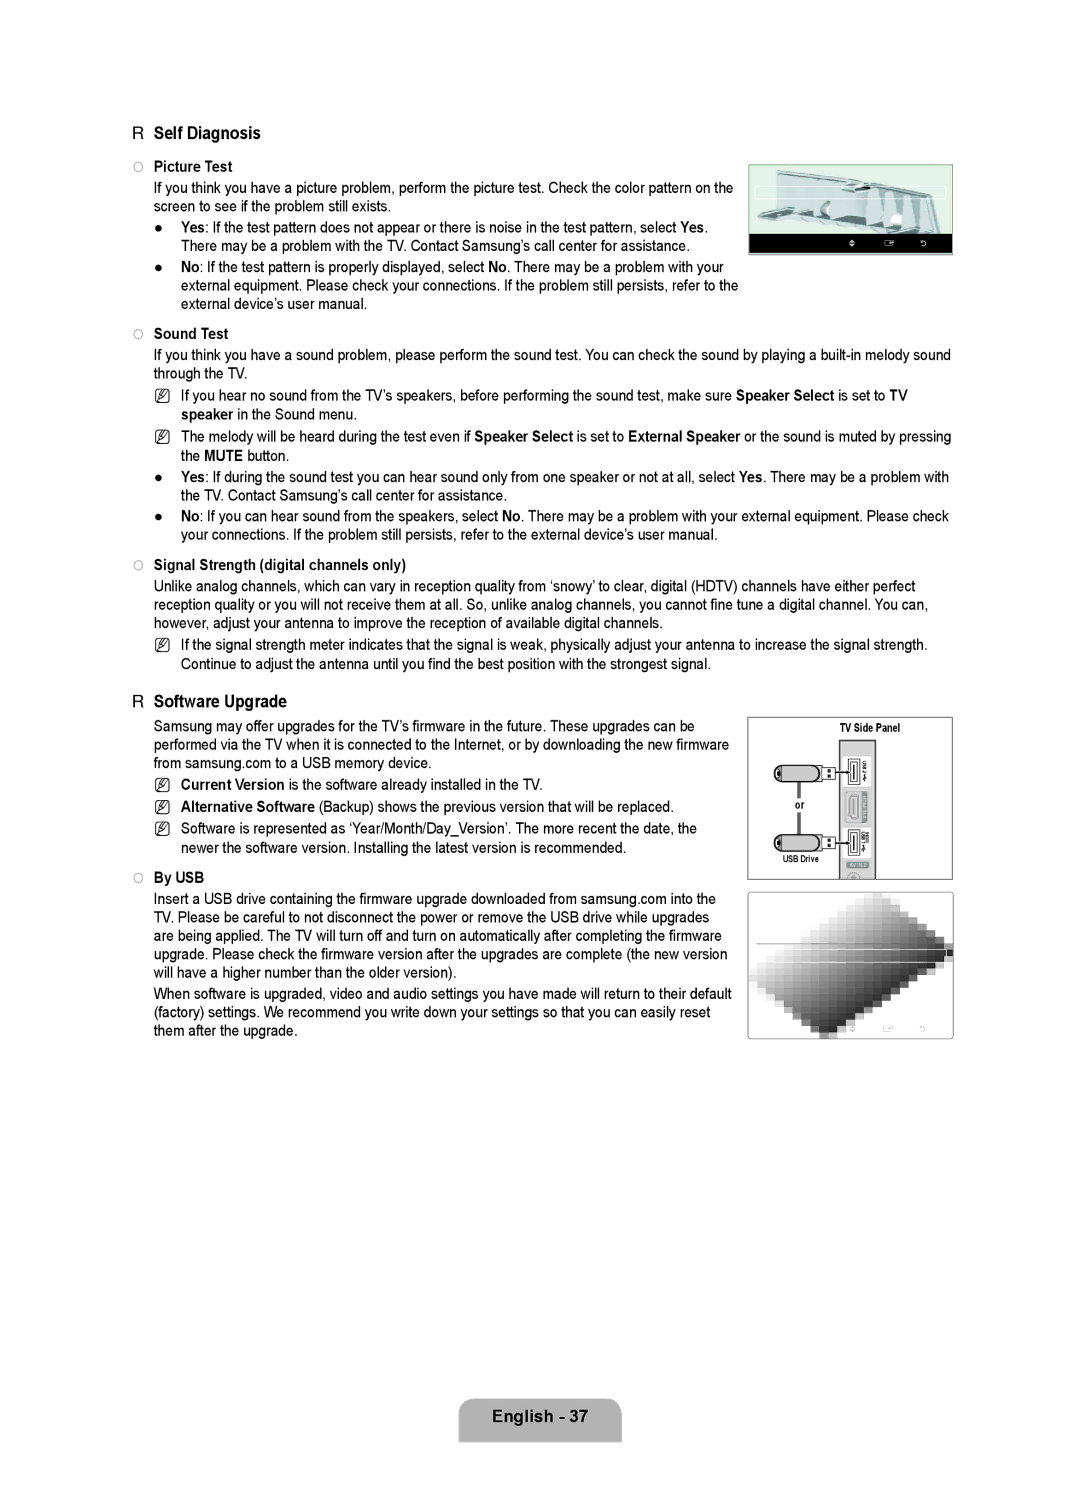 Samsung LN6B60 user manual Self Diagnosis, Software Upgrade 